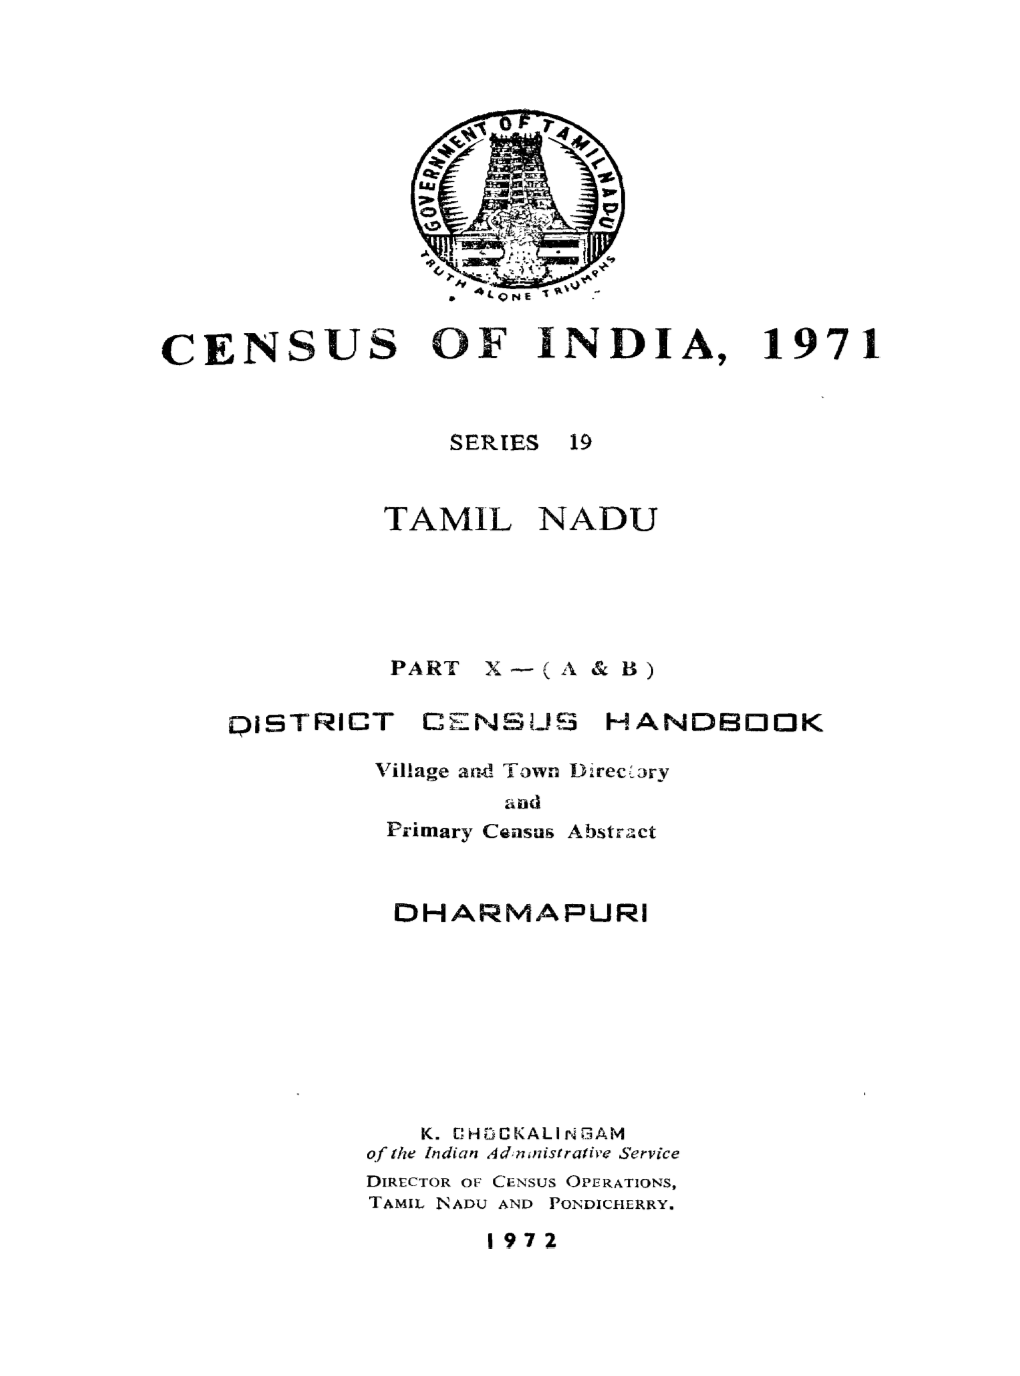 District Census Handbook, Dharmapuri, Part X-(A & B), Series-19